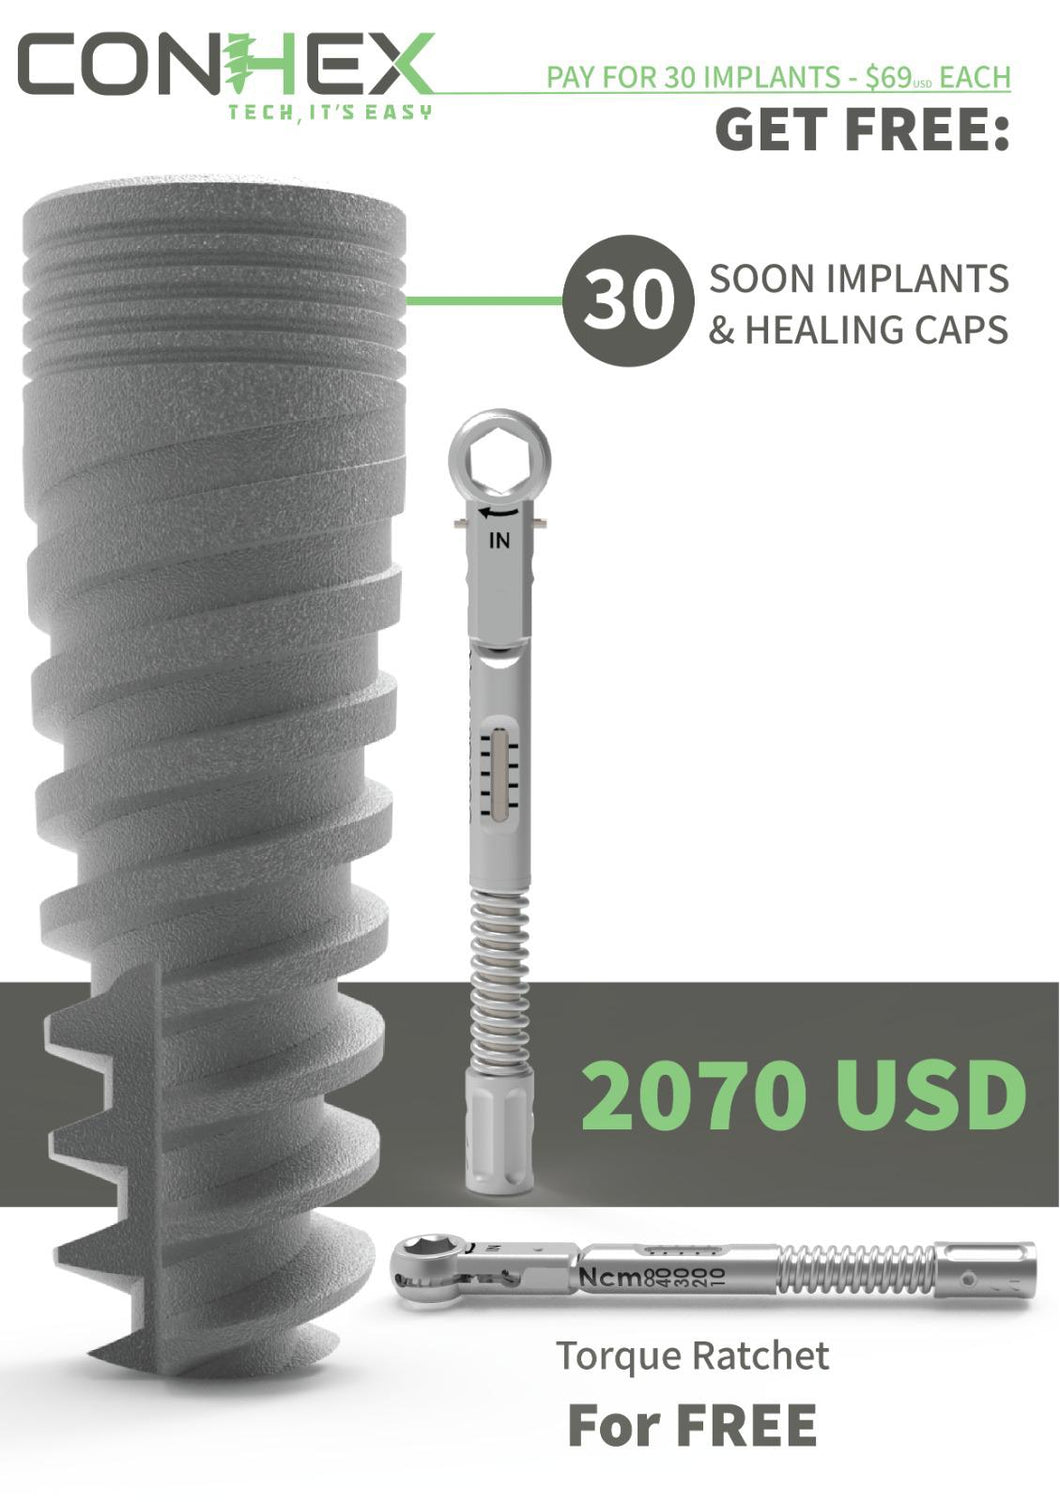 Conhex Black Friday Implant bundle deal! 30 Implants 30 Healing caps Get Free Torque Ratchet